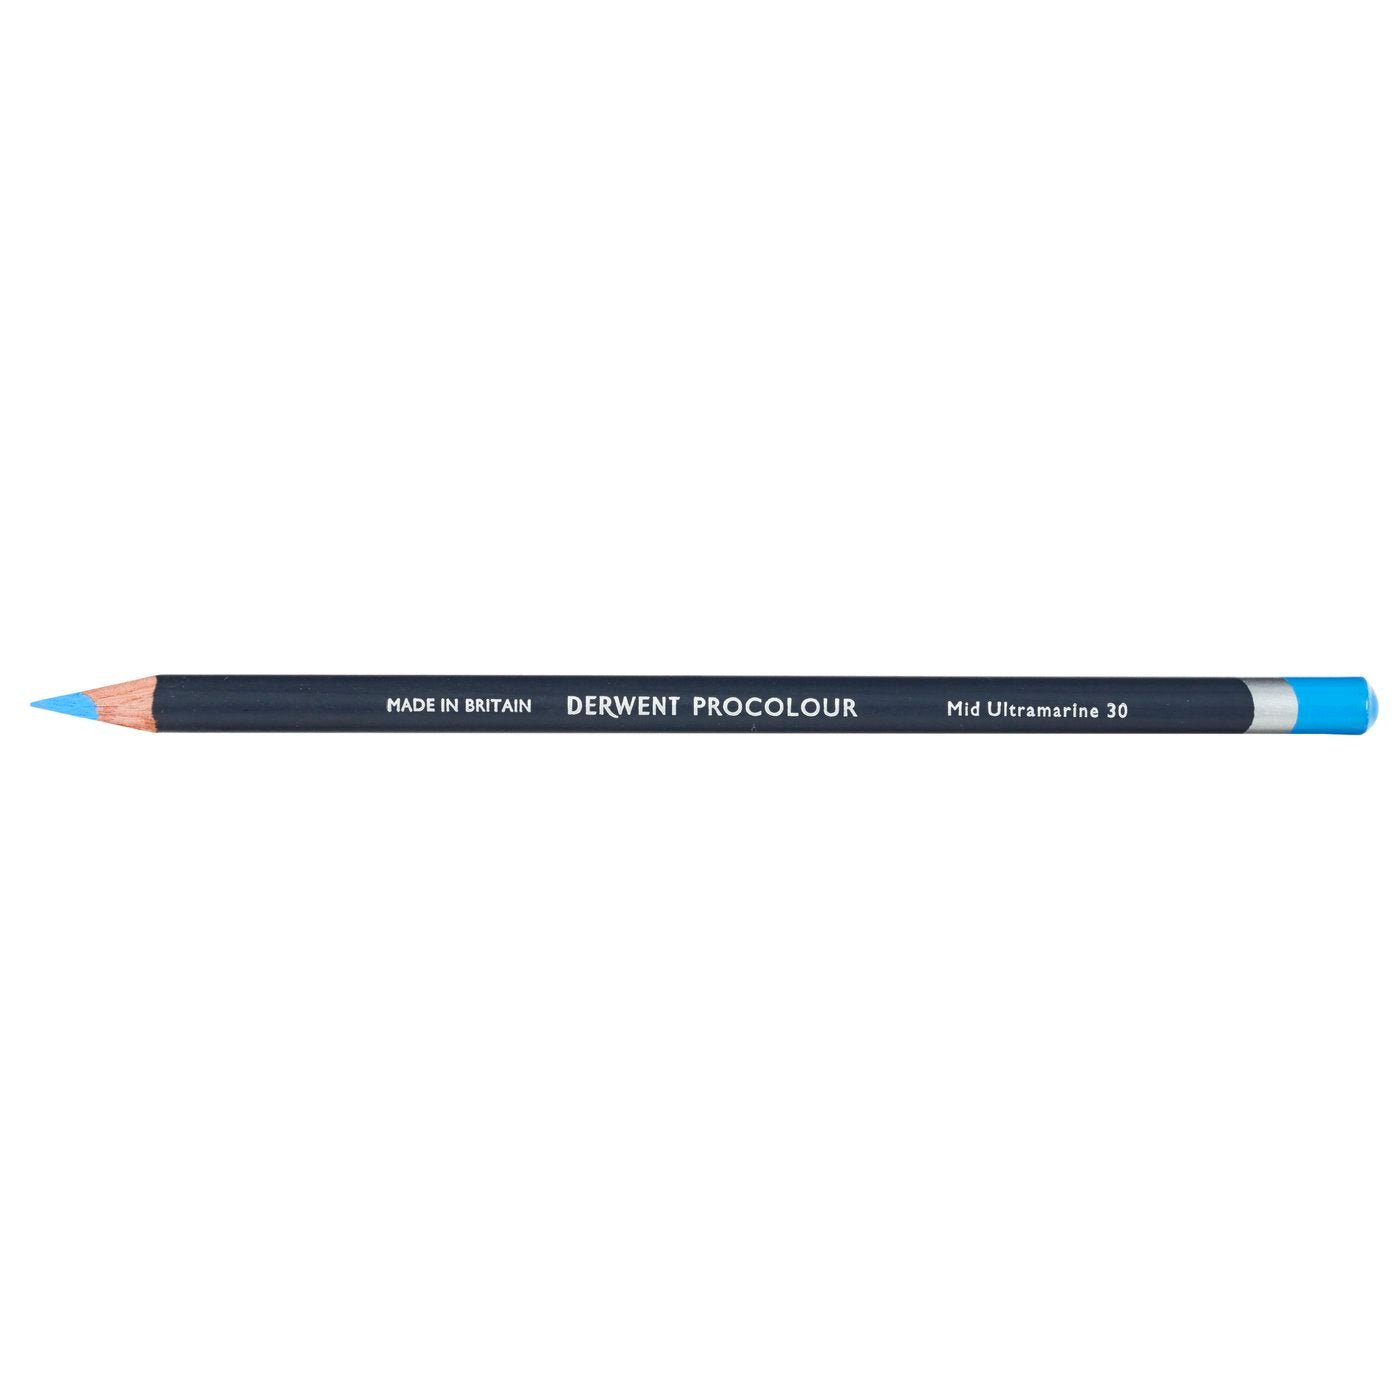 Derwent Procolour Pencil Mid Ultramarine 30 - theartshop.com.au